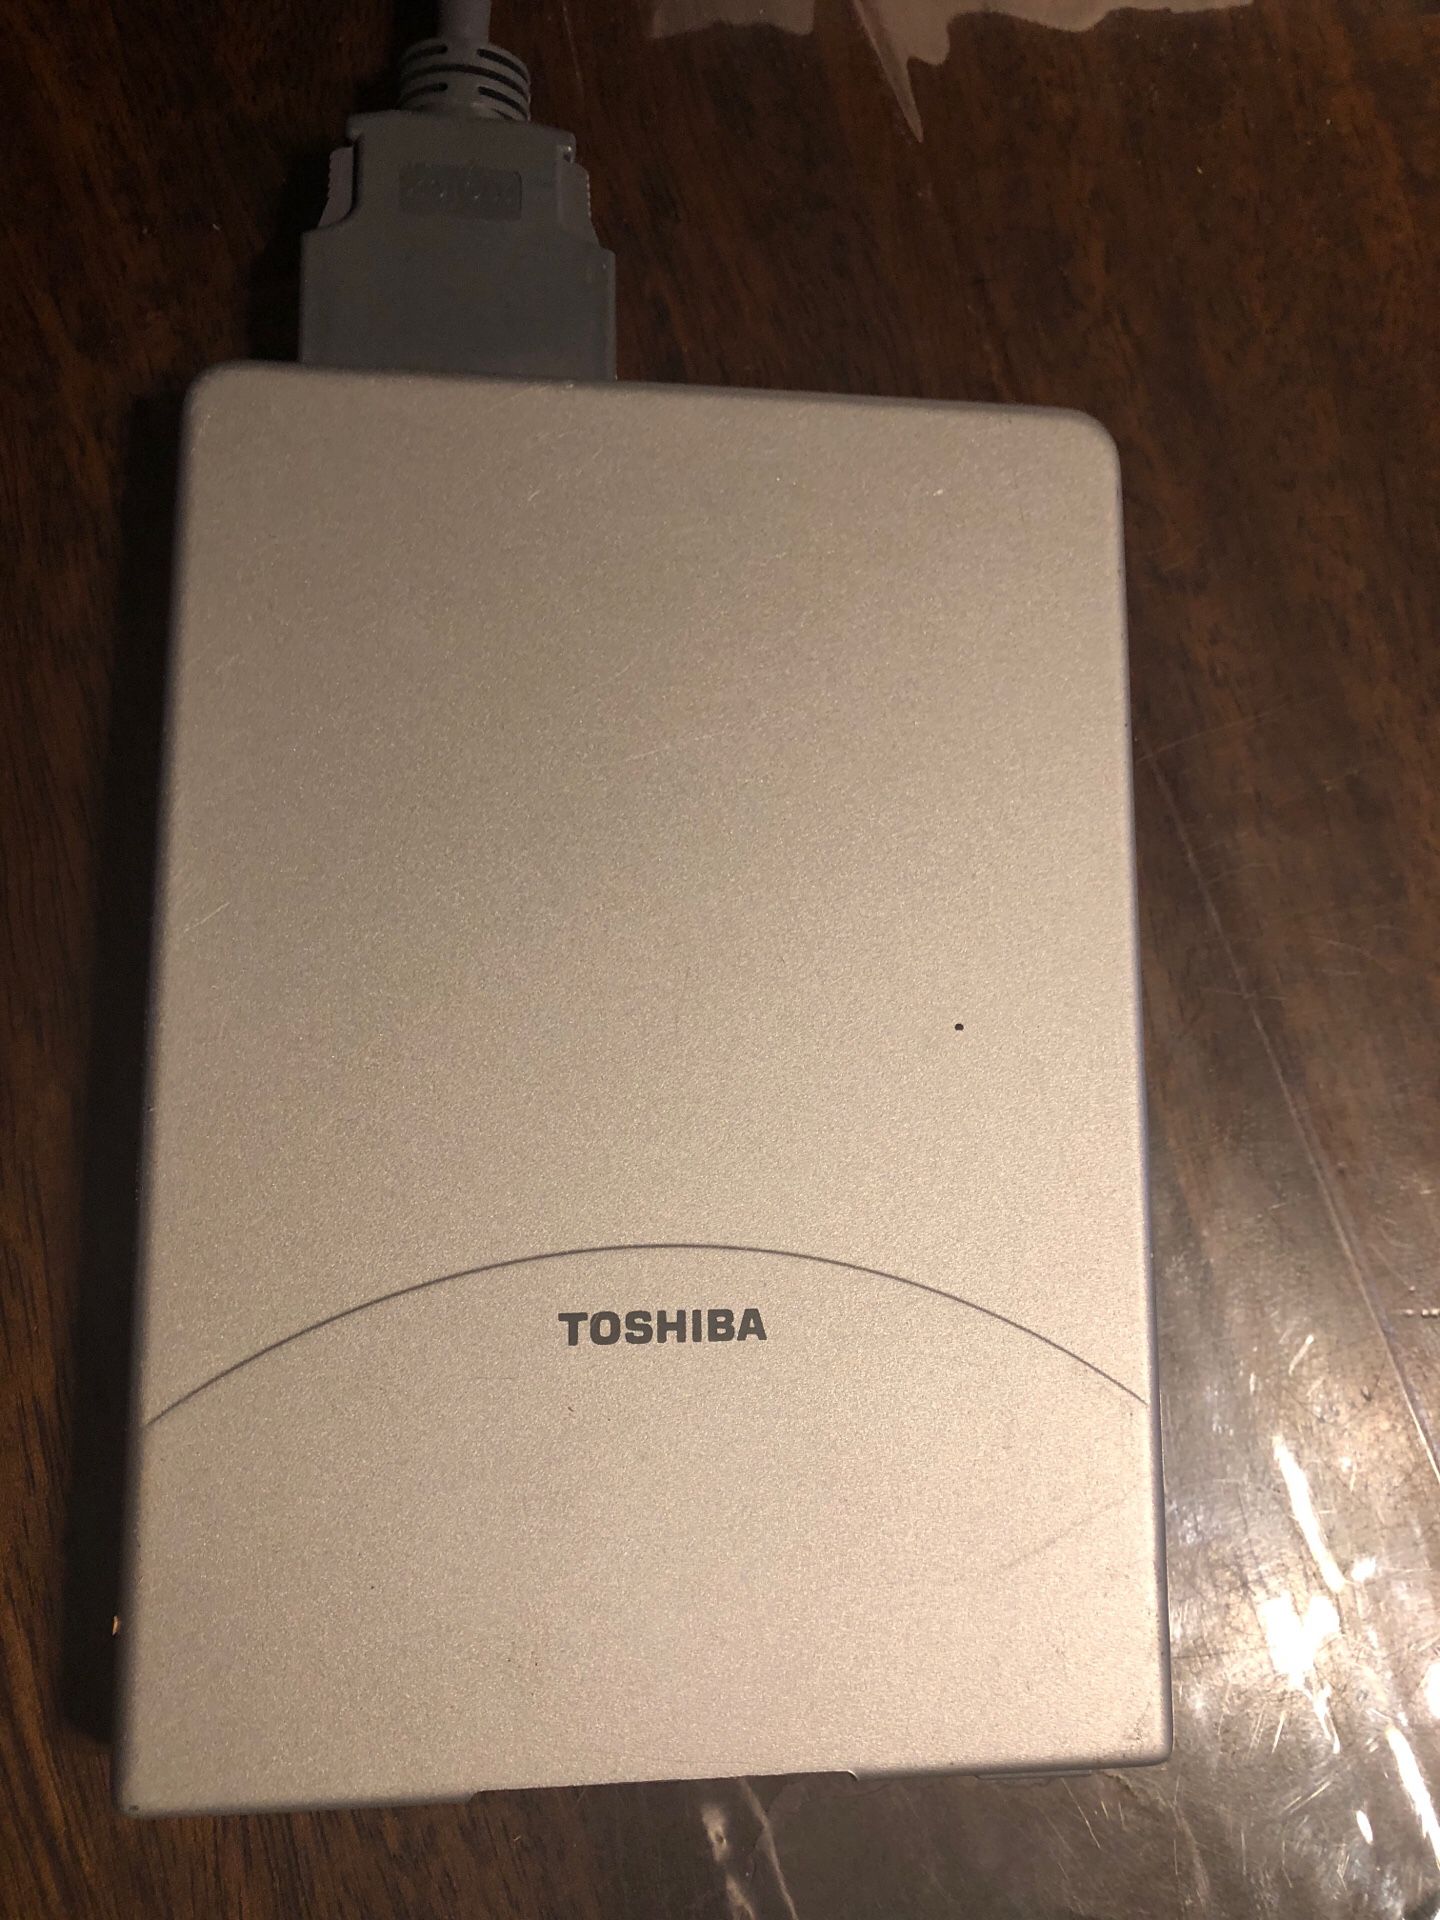 Toshiba model PA2669U